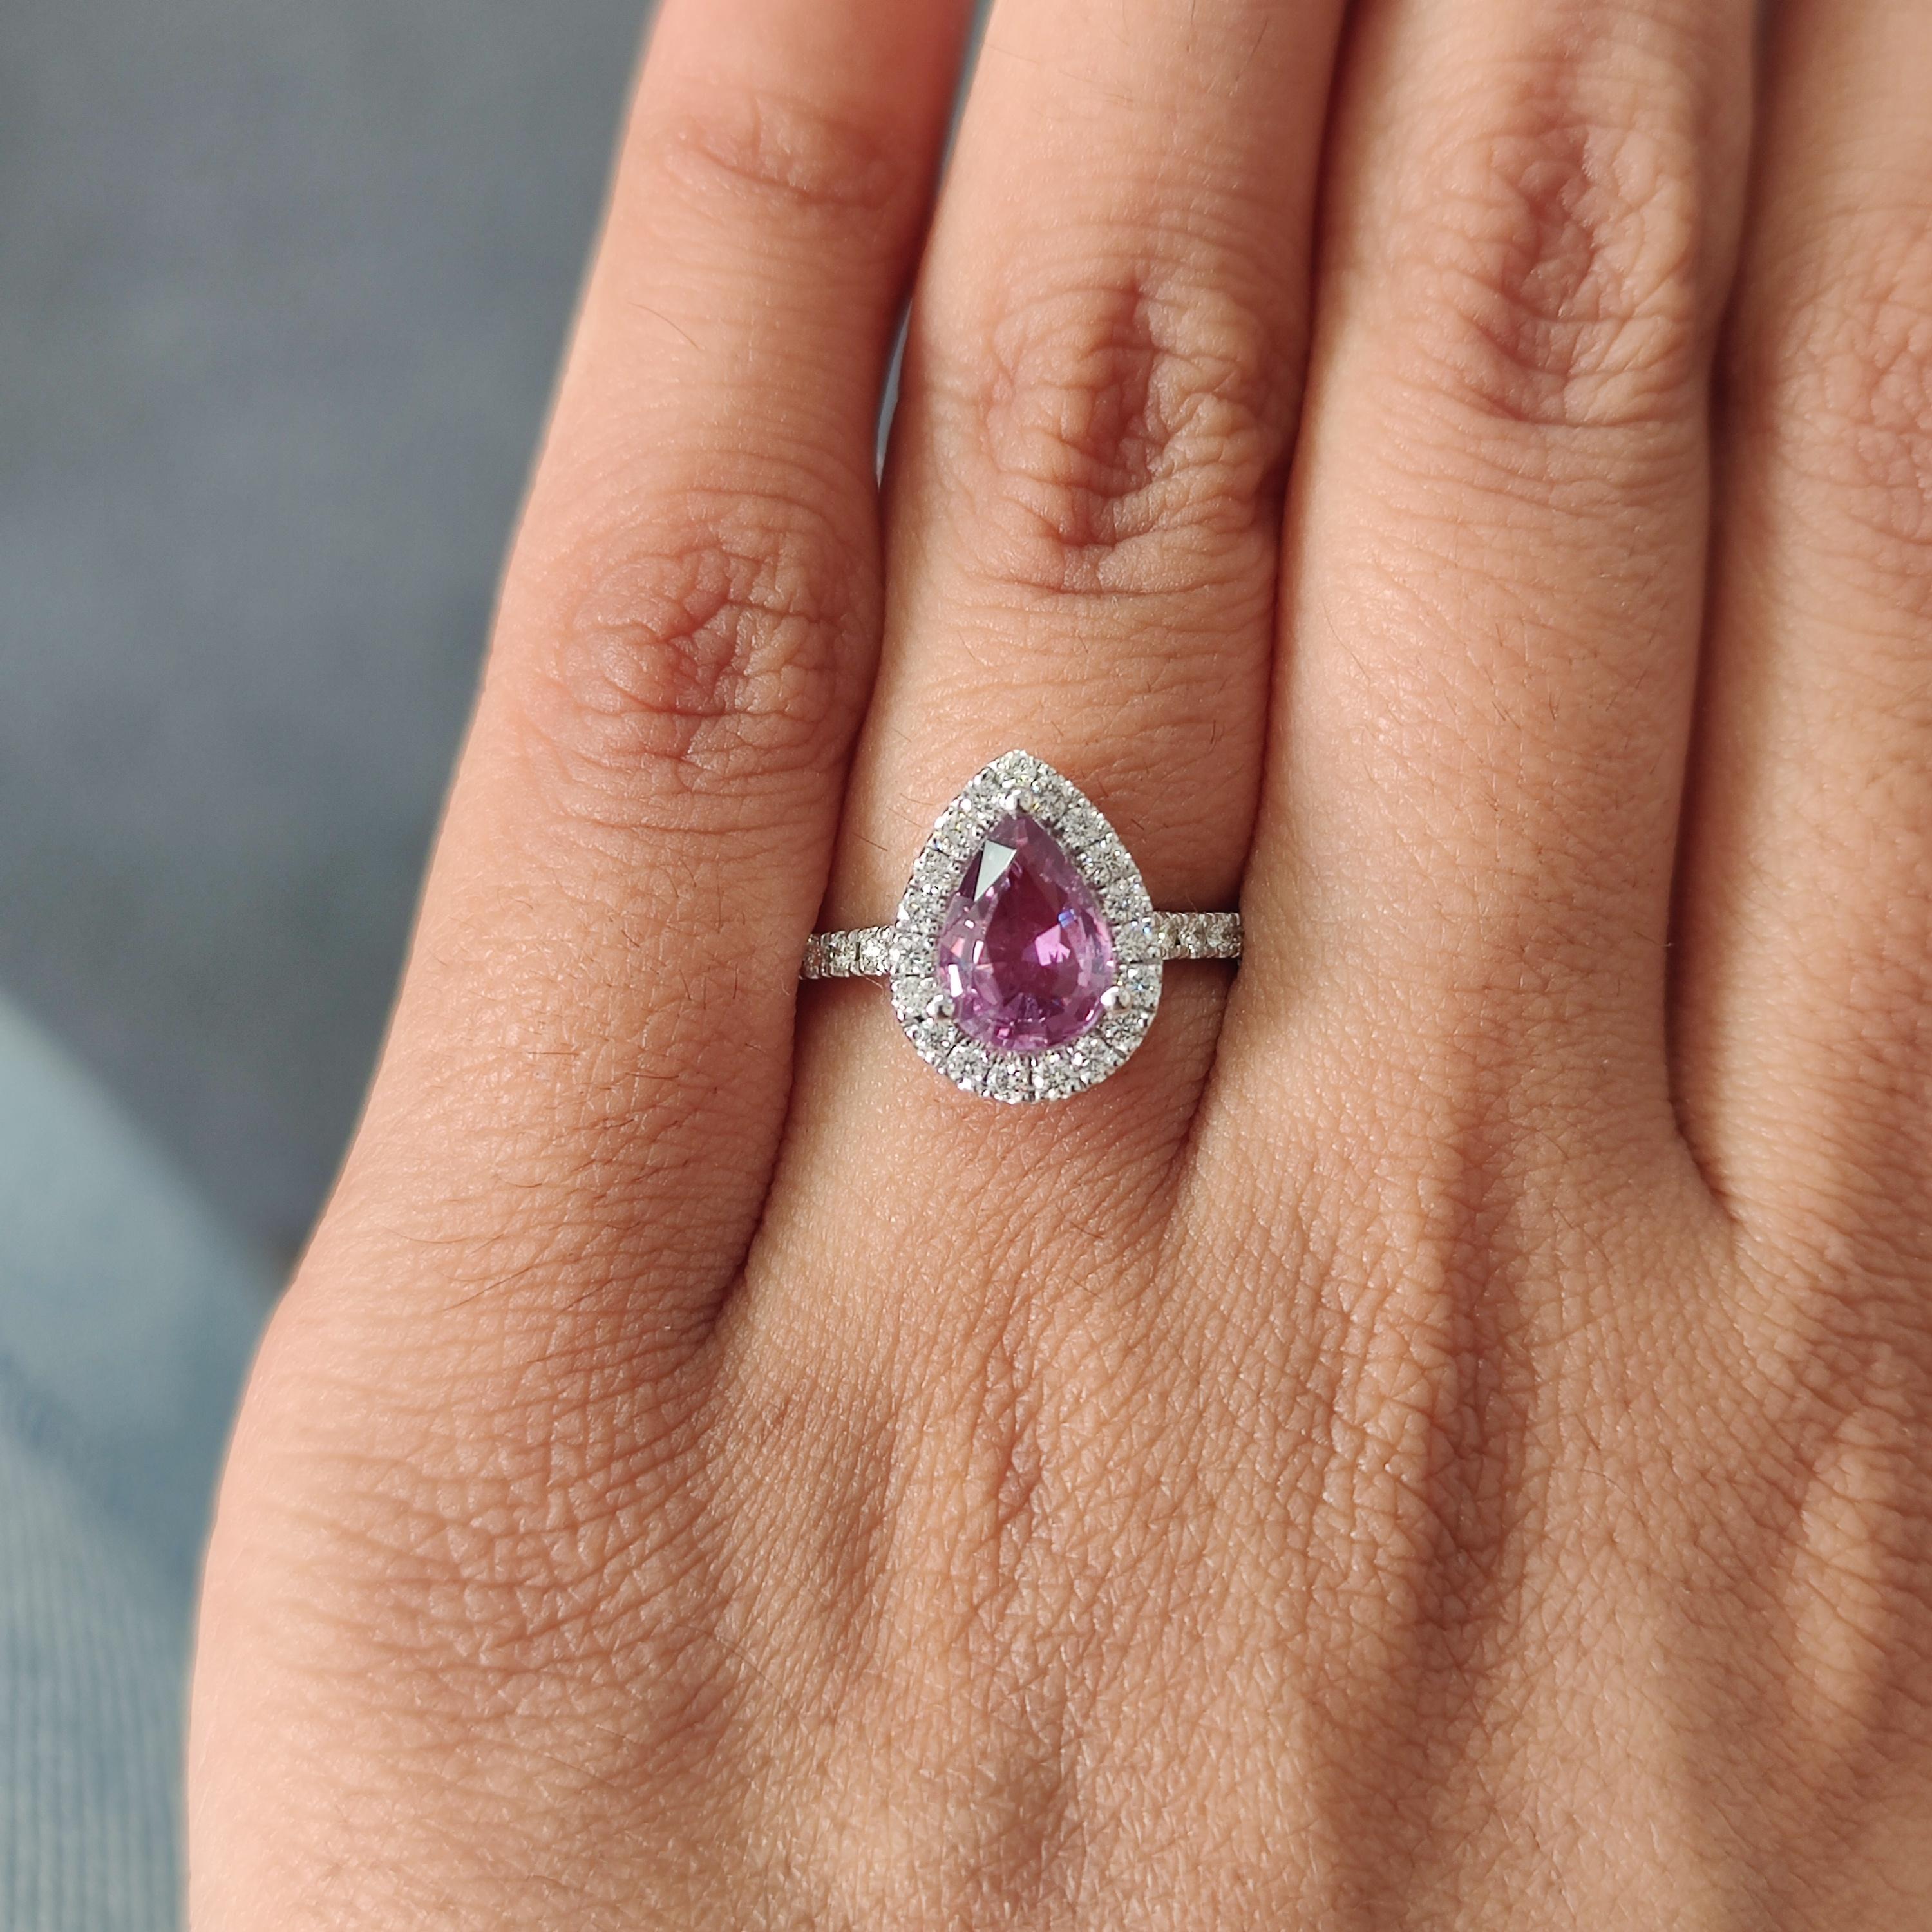 Women's Victorian Style 1.41 Carat Pear Shape Unheated Purple Sapphire Ring in 14k Gold